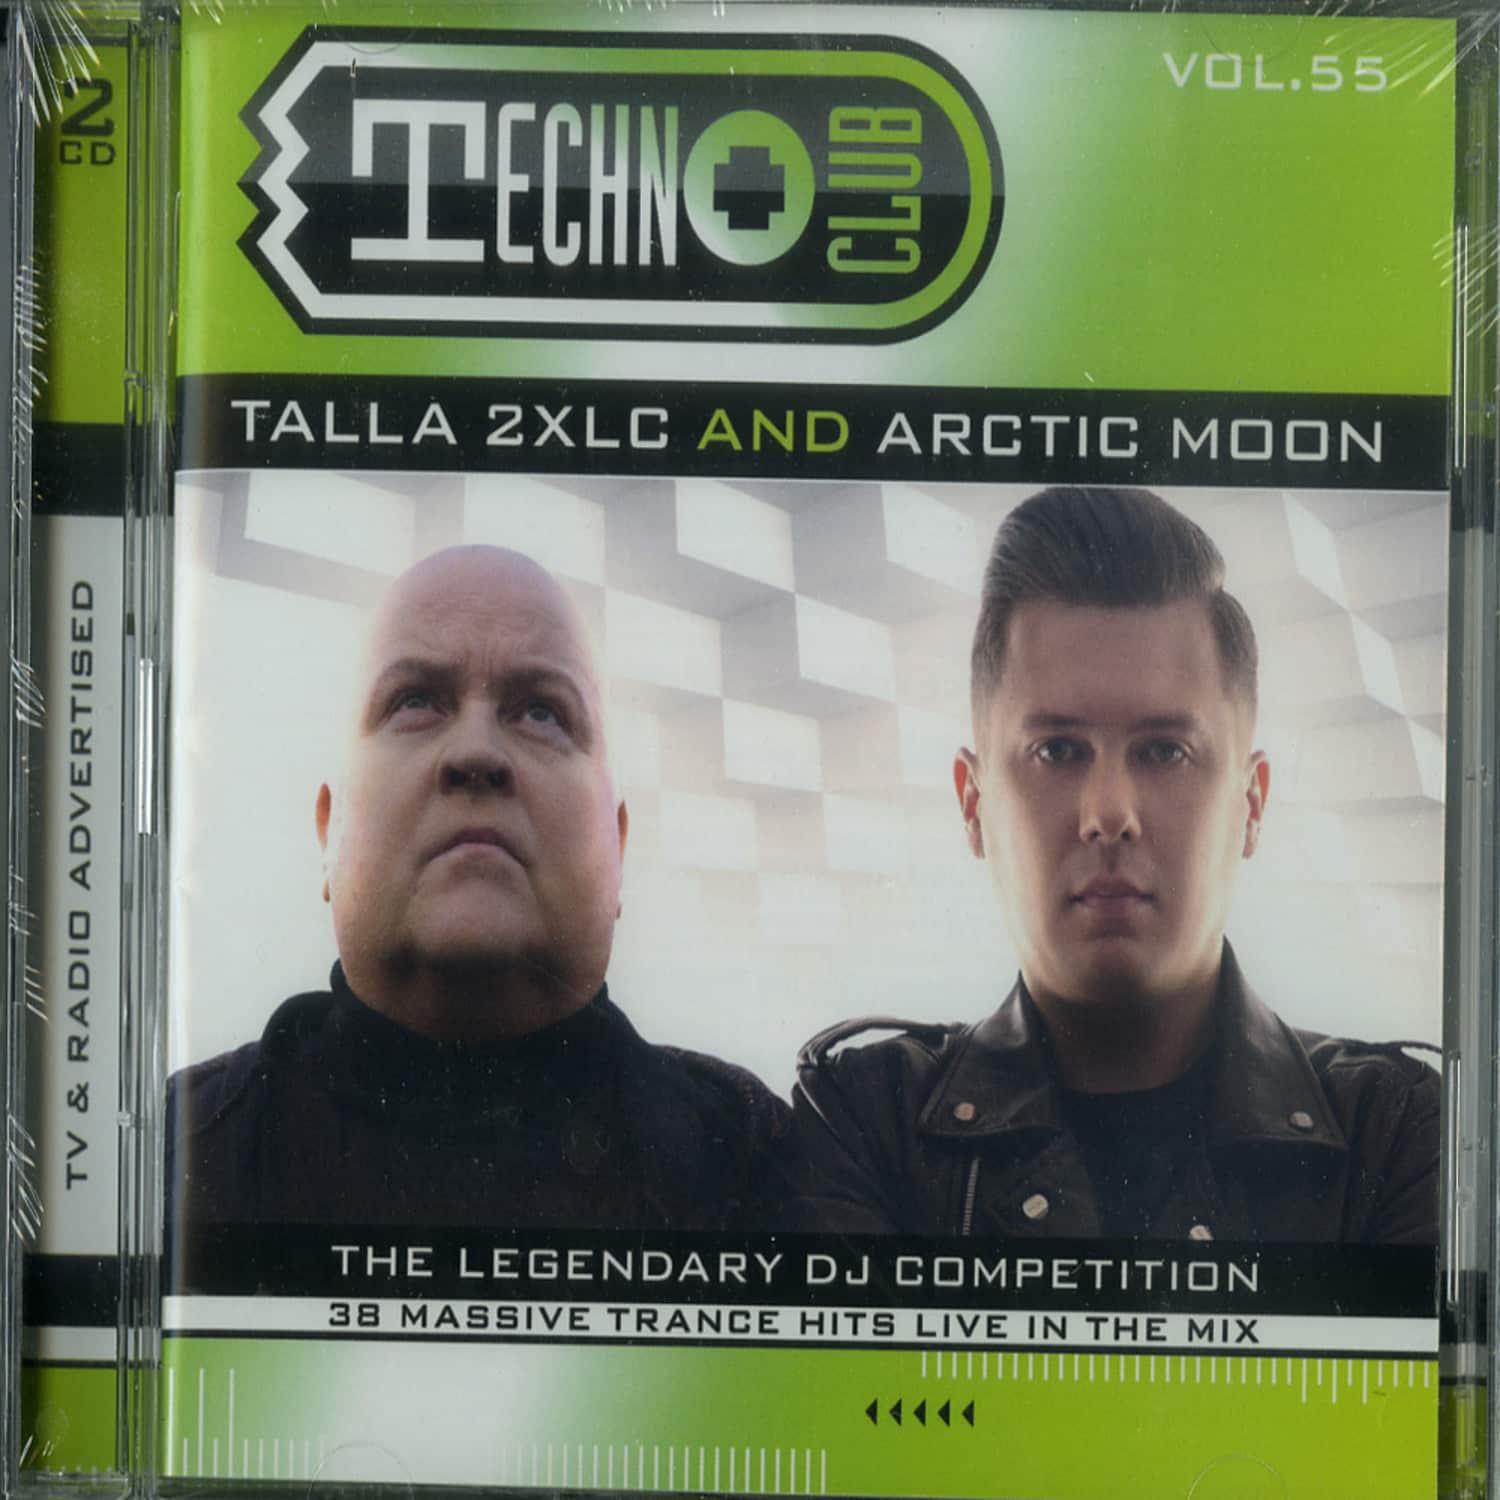 Mixed By Talla 2xlc & Arctic Moon - TECHNO CLUB VOL.55 